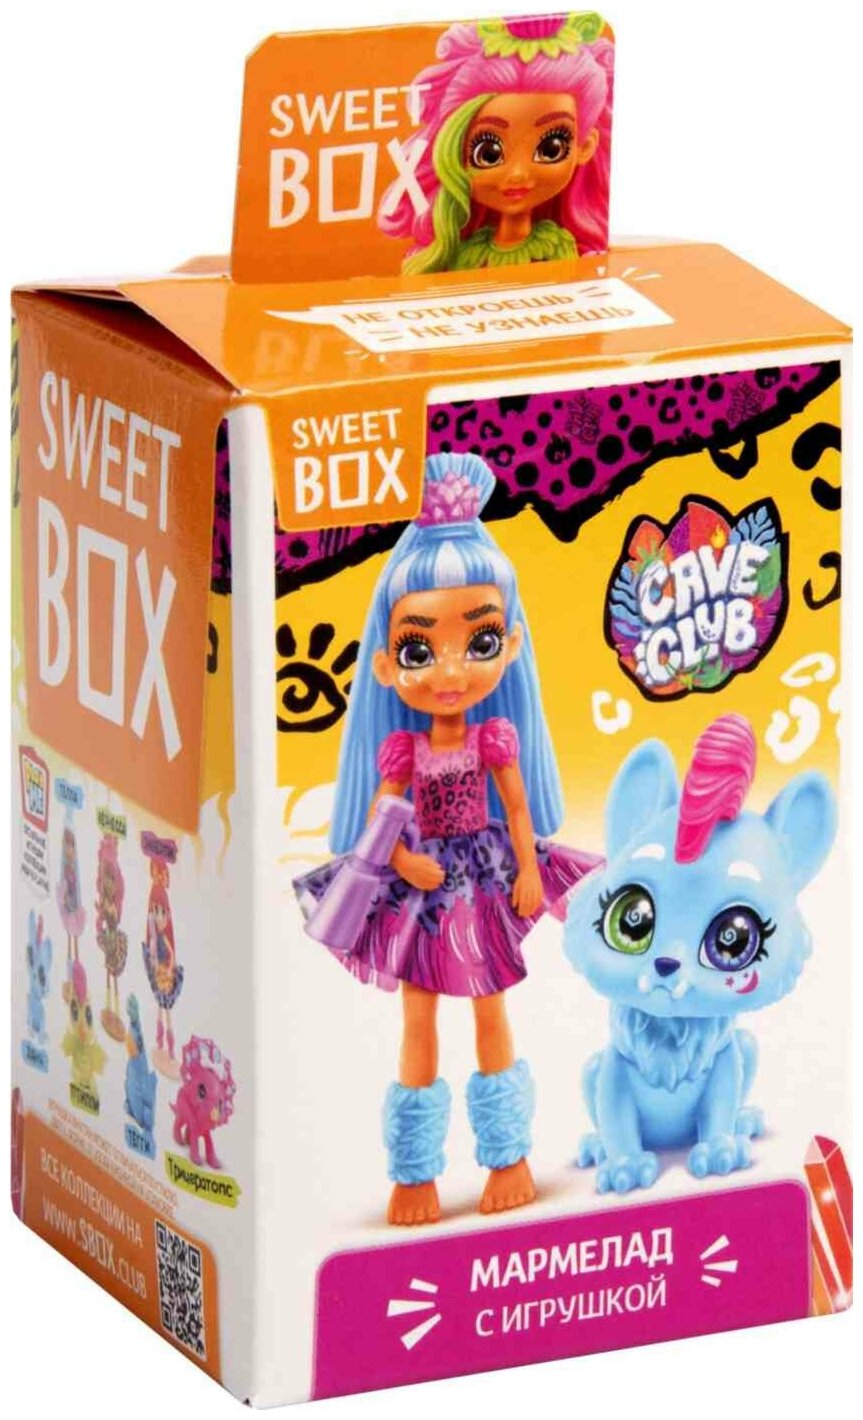 SWEET BOX CAVE CLUB Мармелад с игрушкой в коробочке, 10г. - фотография № 2